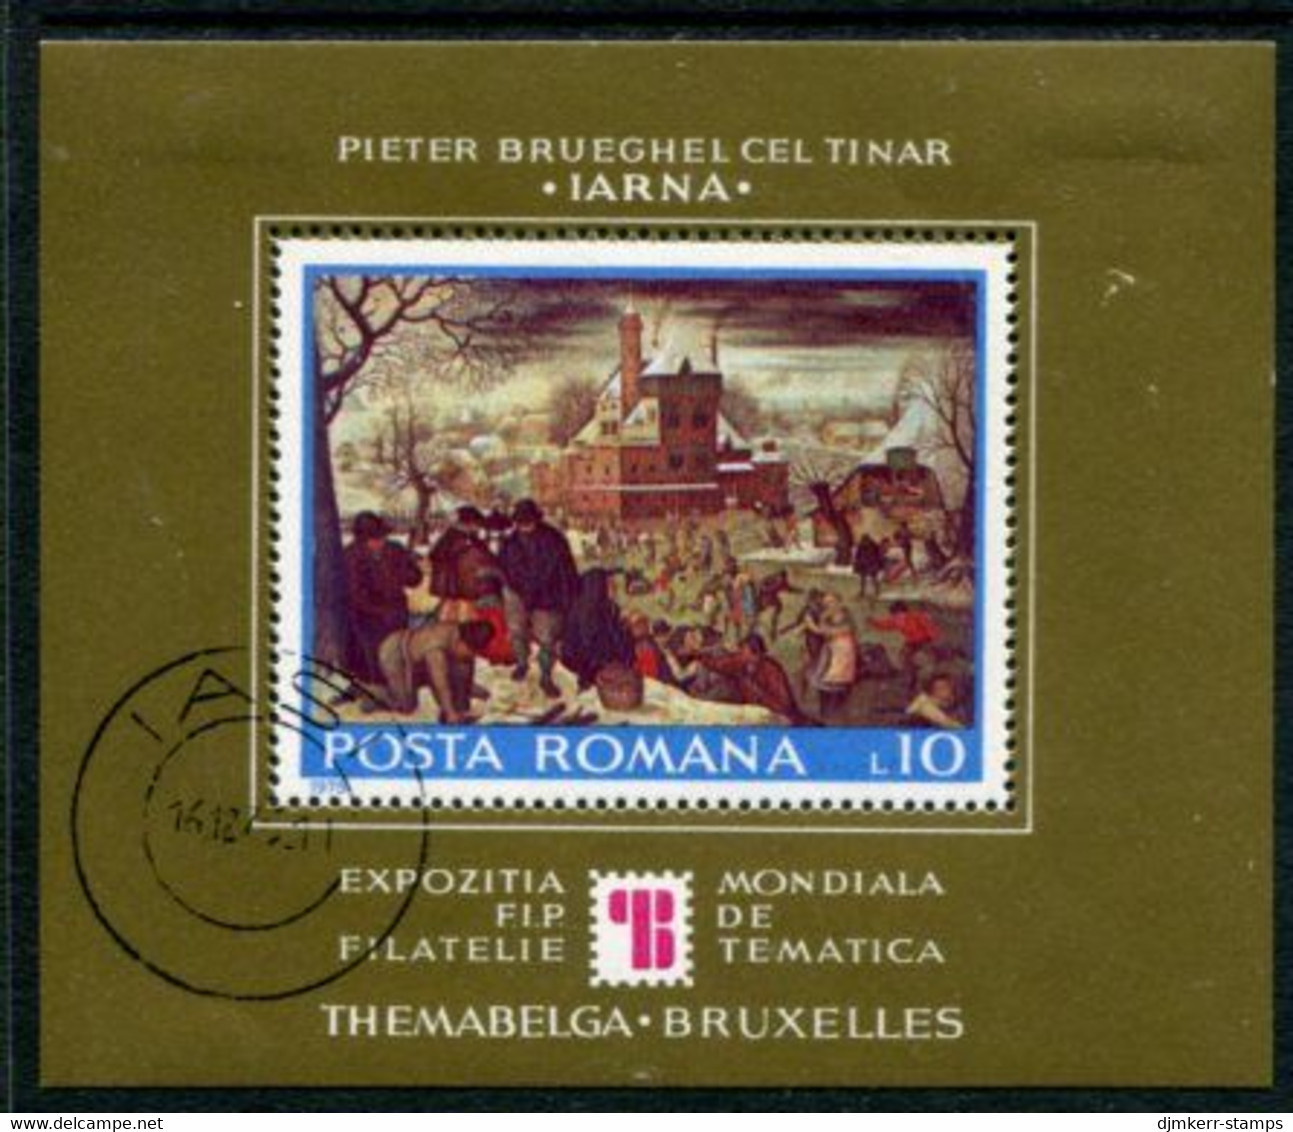 ROMANIA 1975 THEMABELGA Stamp Exhibition Block Used.  Michel Block 127 - Usado